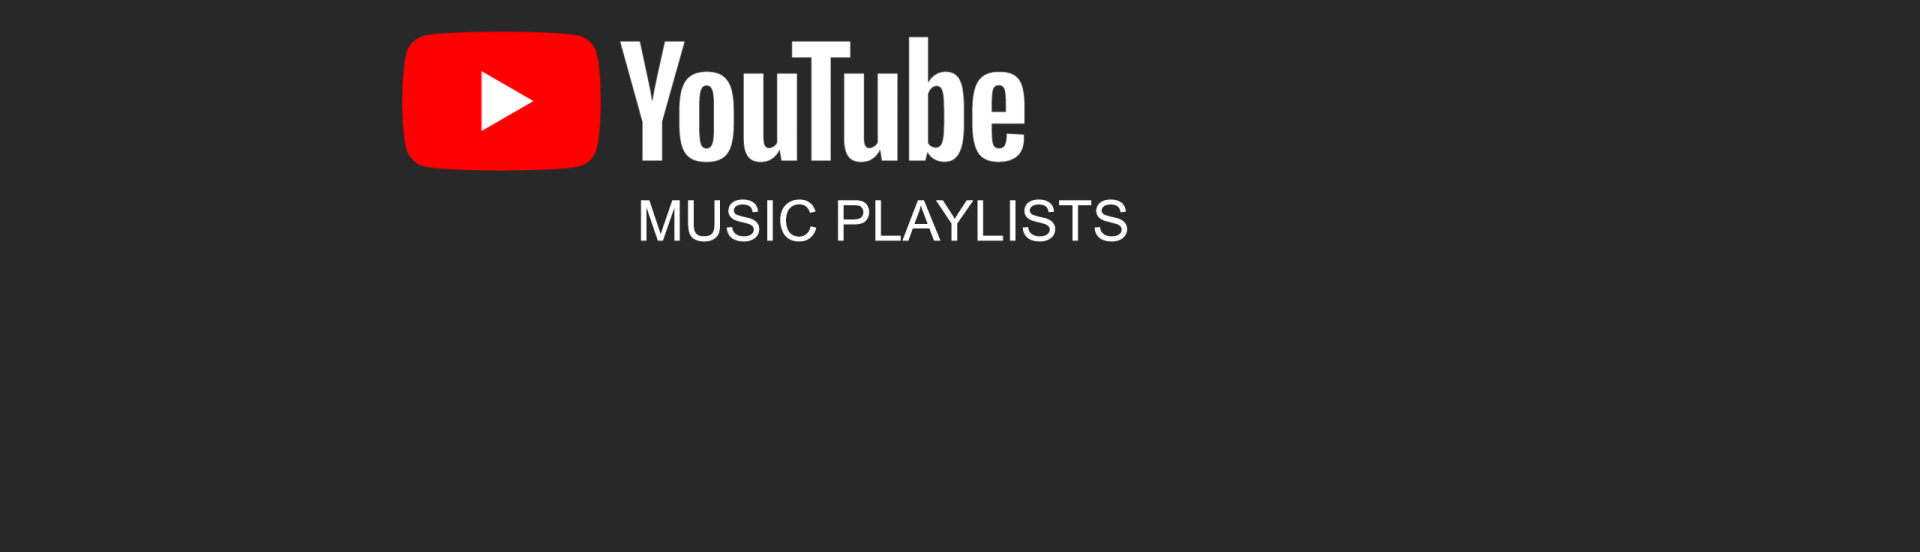 Youtube Music Charts Playlist